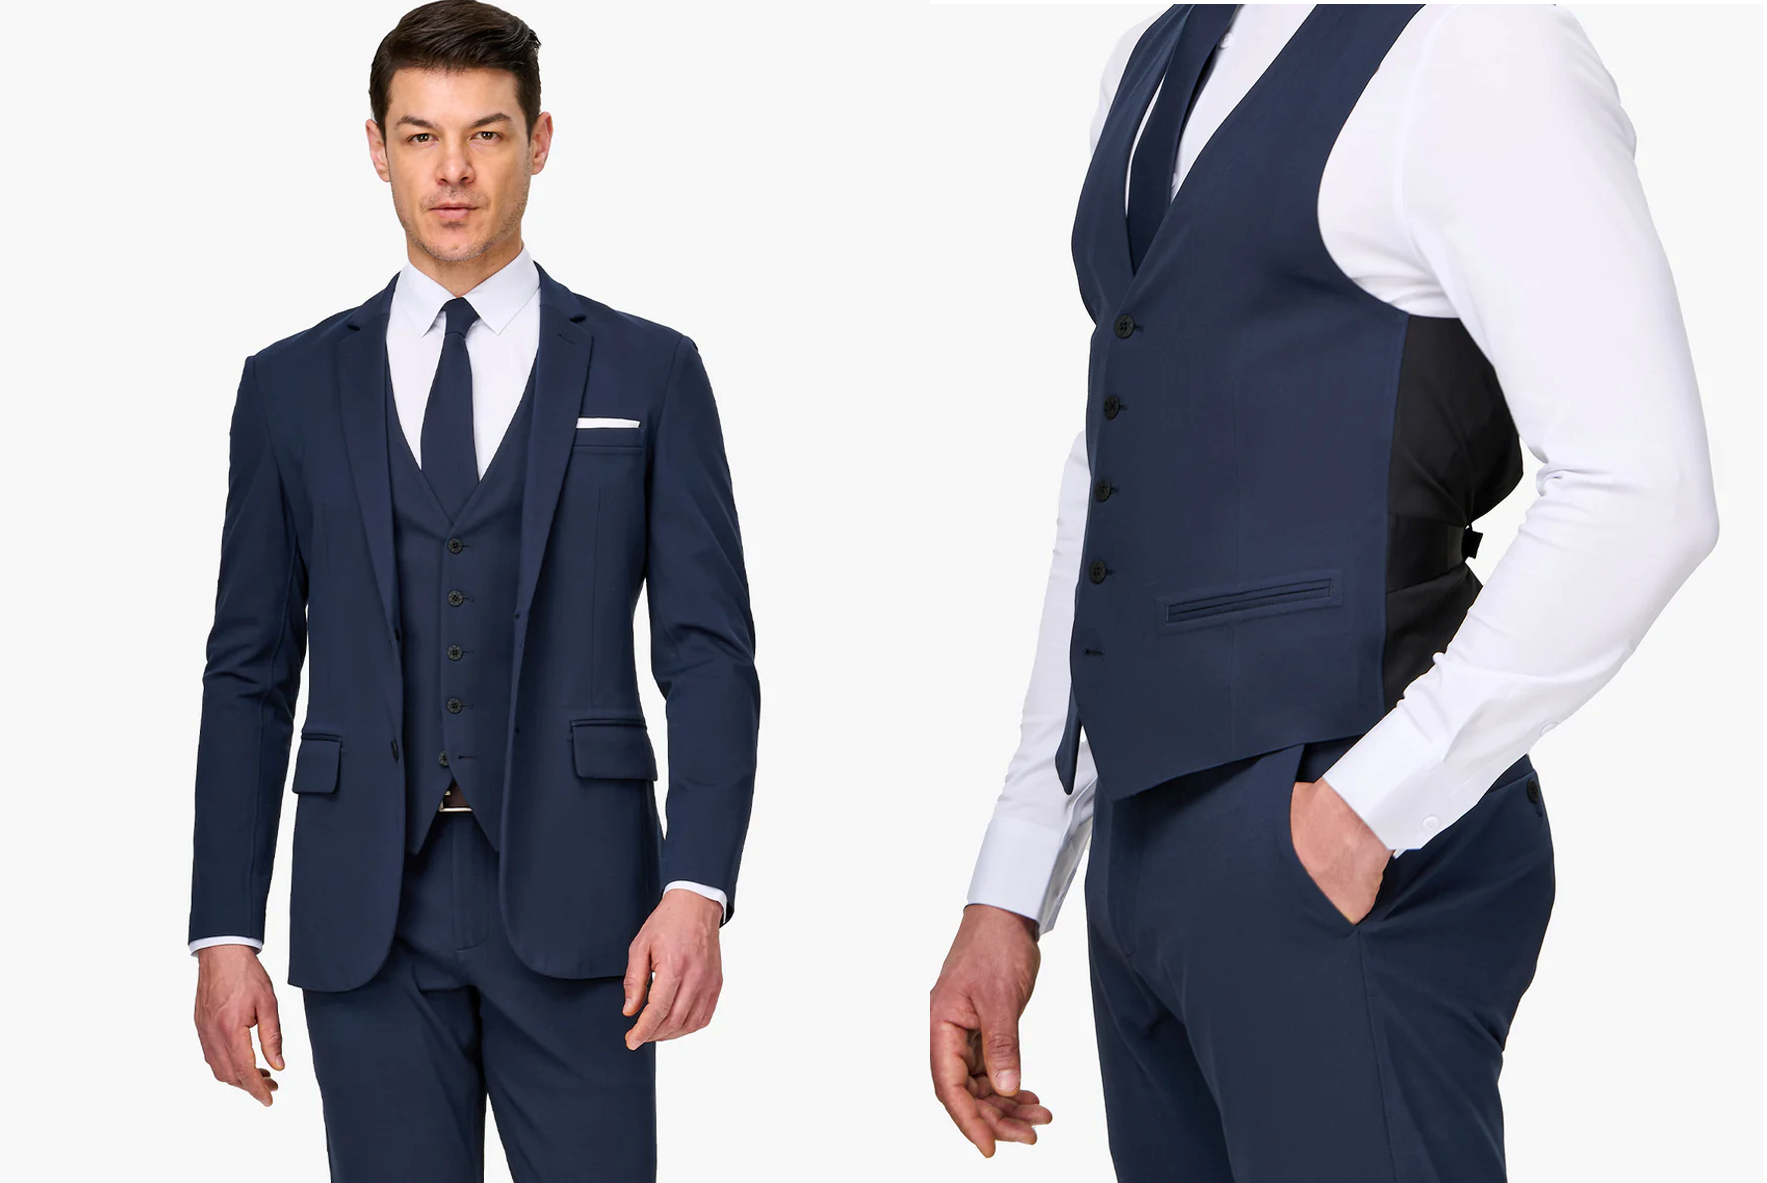 Buy MY'S Men's 3 Piece Suit Blazer Slim Fit One Button Notch Lapel Dress  Business Wedding Party Jacket Vest Pants & Tie Set Light Grey at Amazon.in